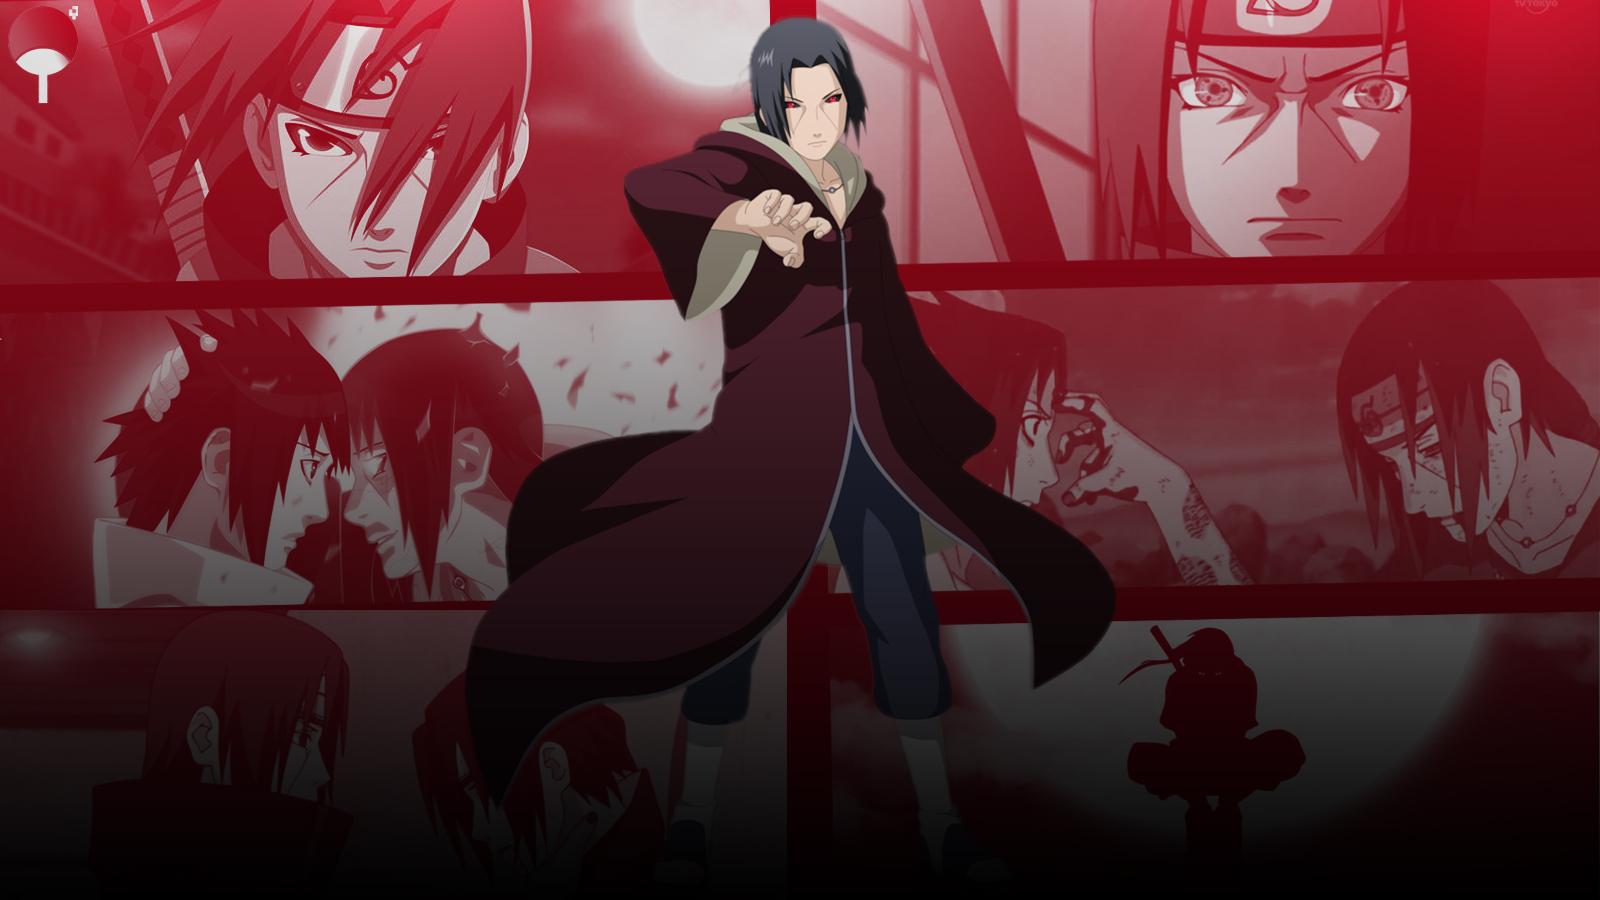 Anime 1600x900 Uchiha Itachi Naruto Shippuden anime red eyes anime boys dark hair standing red background